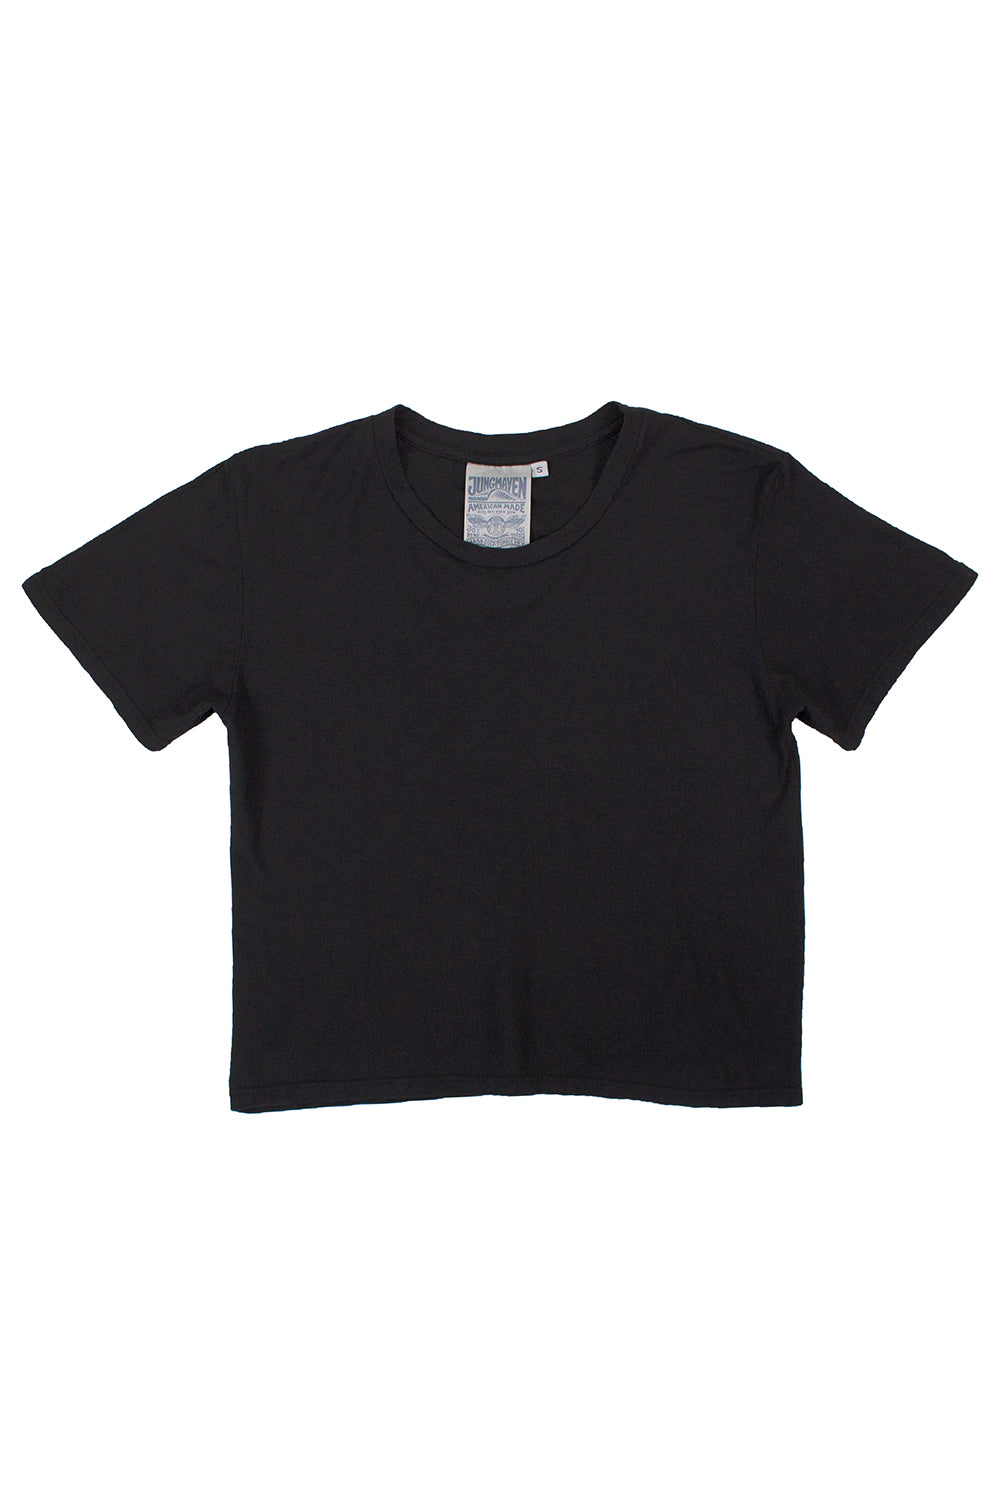 Cropped Ojai Tee | Jungmaven Hemp Clothing & Accessories / Color: Black